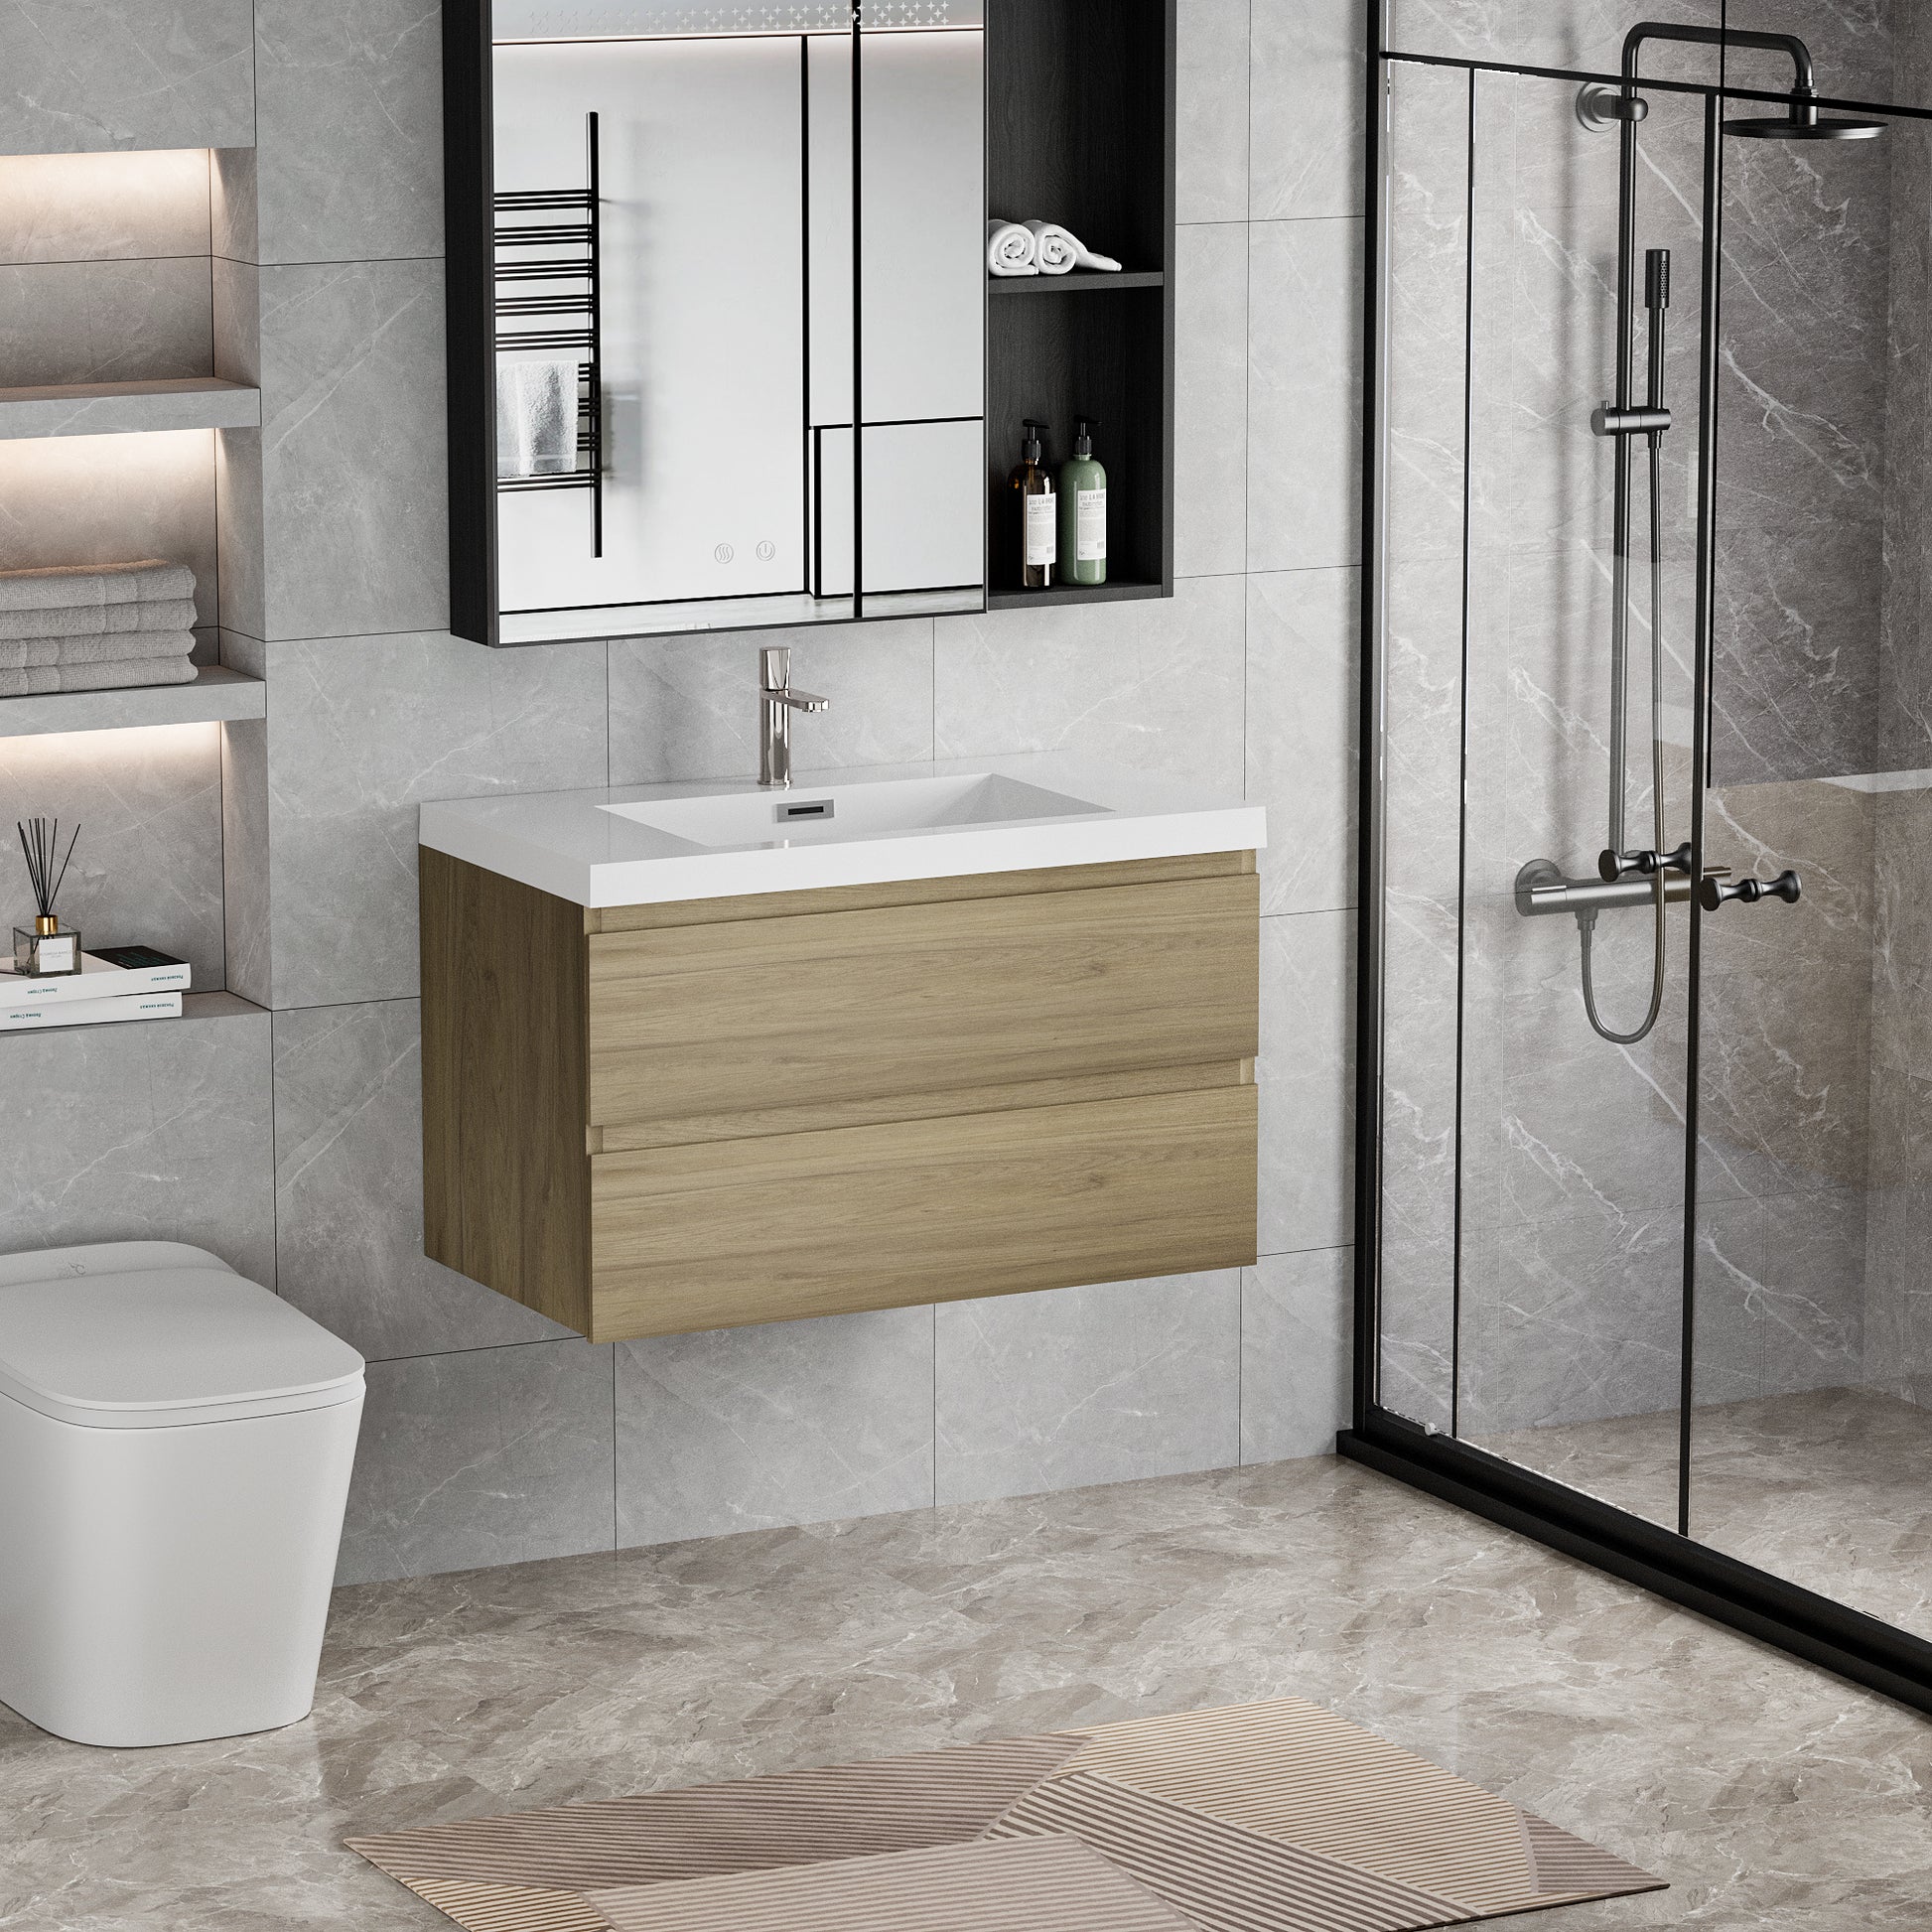 36" Floating Bathroom Vanity with Sink, Modern Wall 2-oak-bathroom-wall mounted-mdf